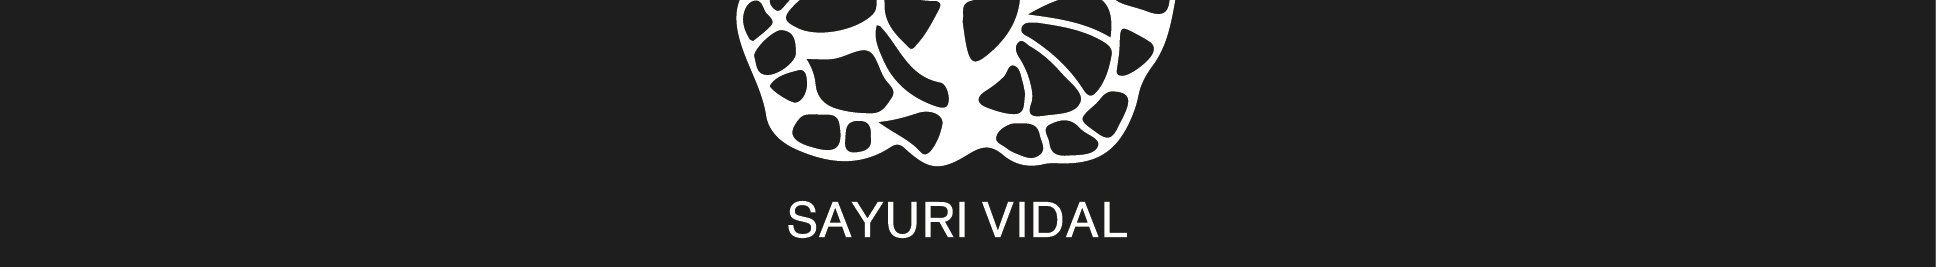 Banner profilu uživatele Sayuri Vidal